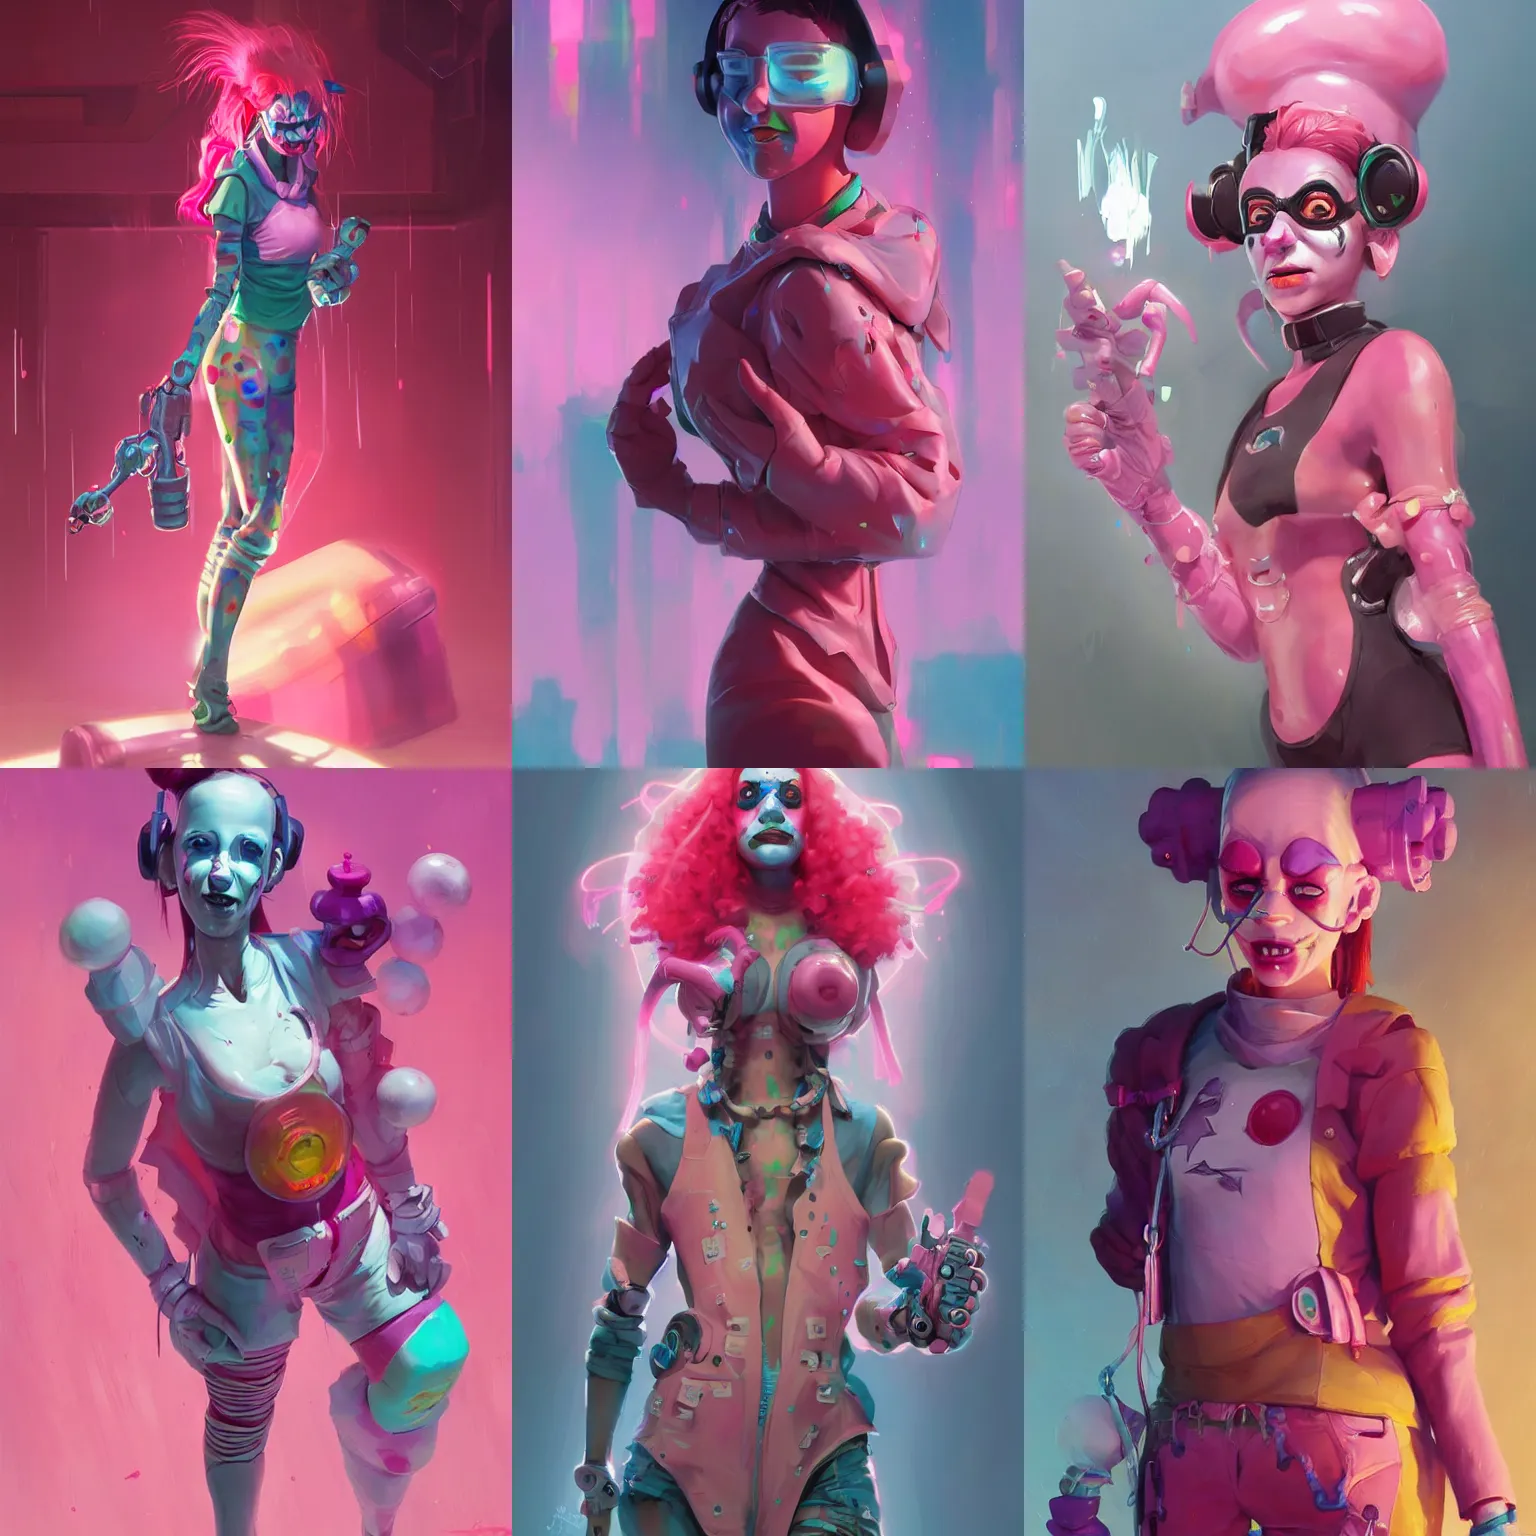 Prompt: cyberpunk clown girl made of pink slime, cartoon, transparent, behance hd artstation by jesper ejsing by rhads, makoto shinkai and lois van baarle, ilya kuvshinov, ossdraws